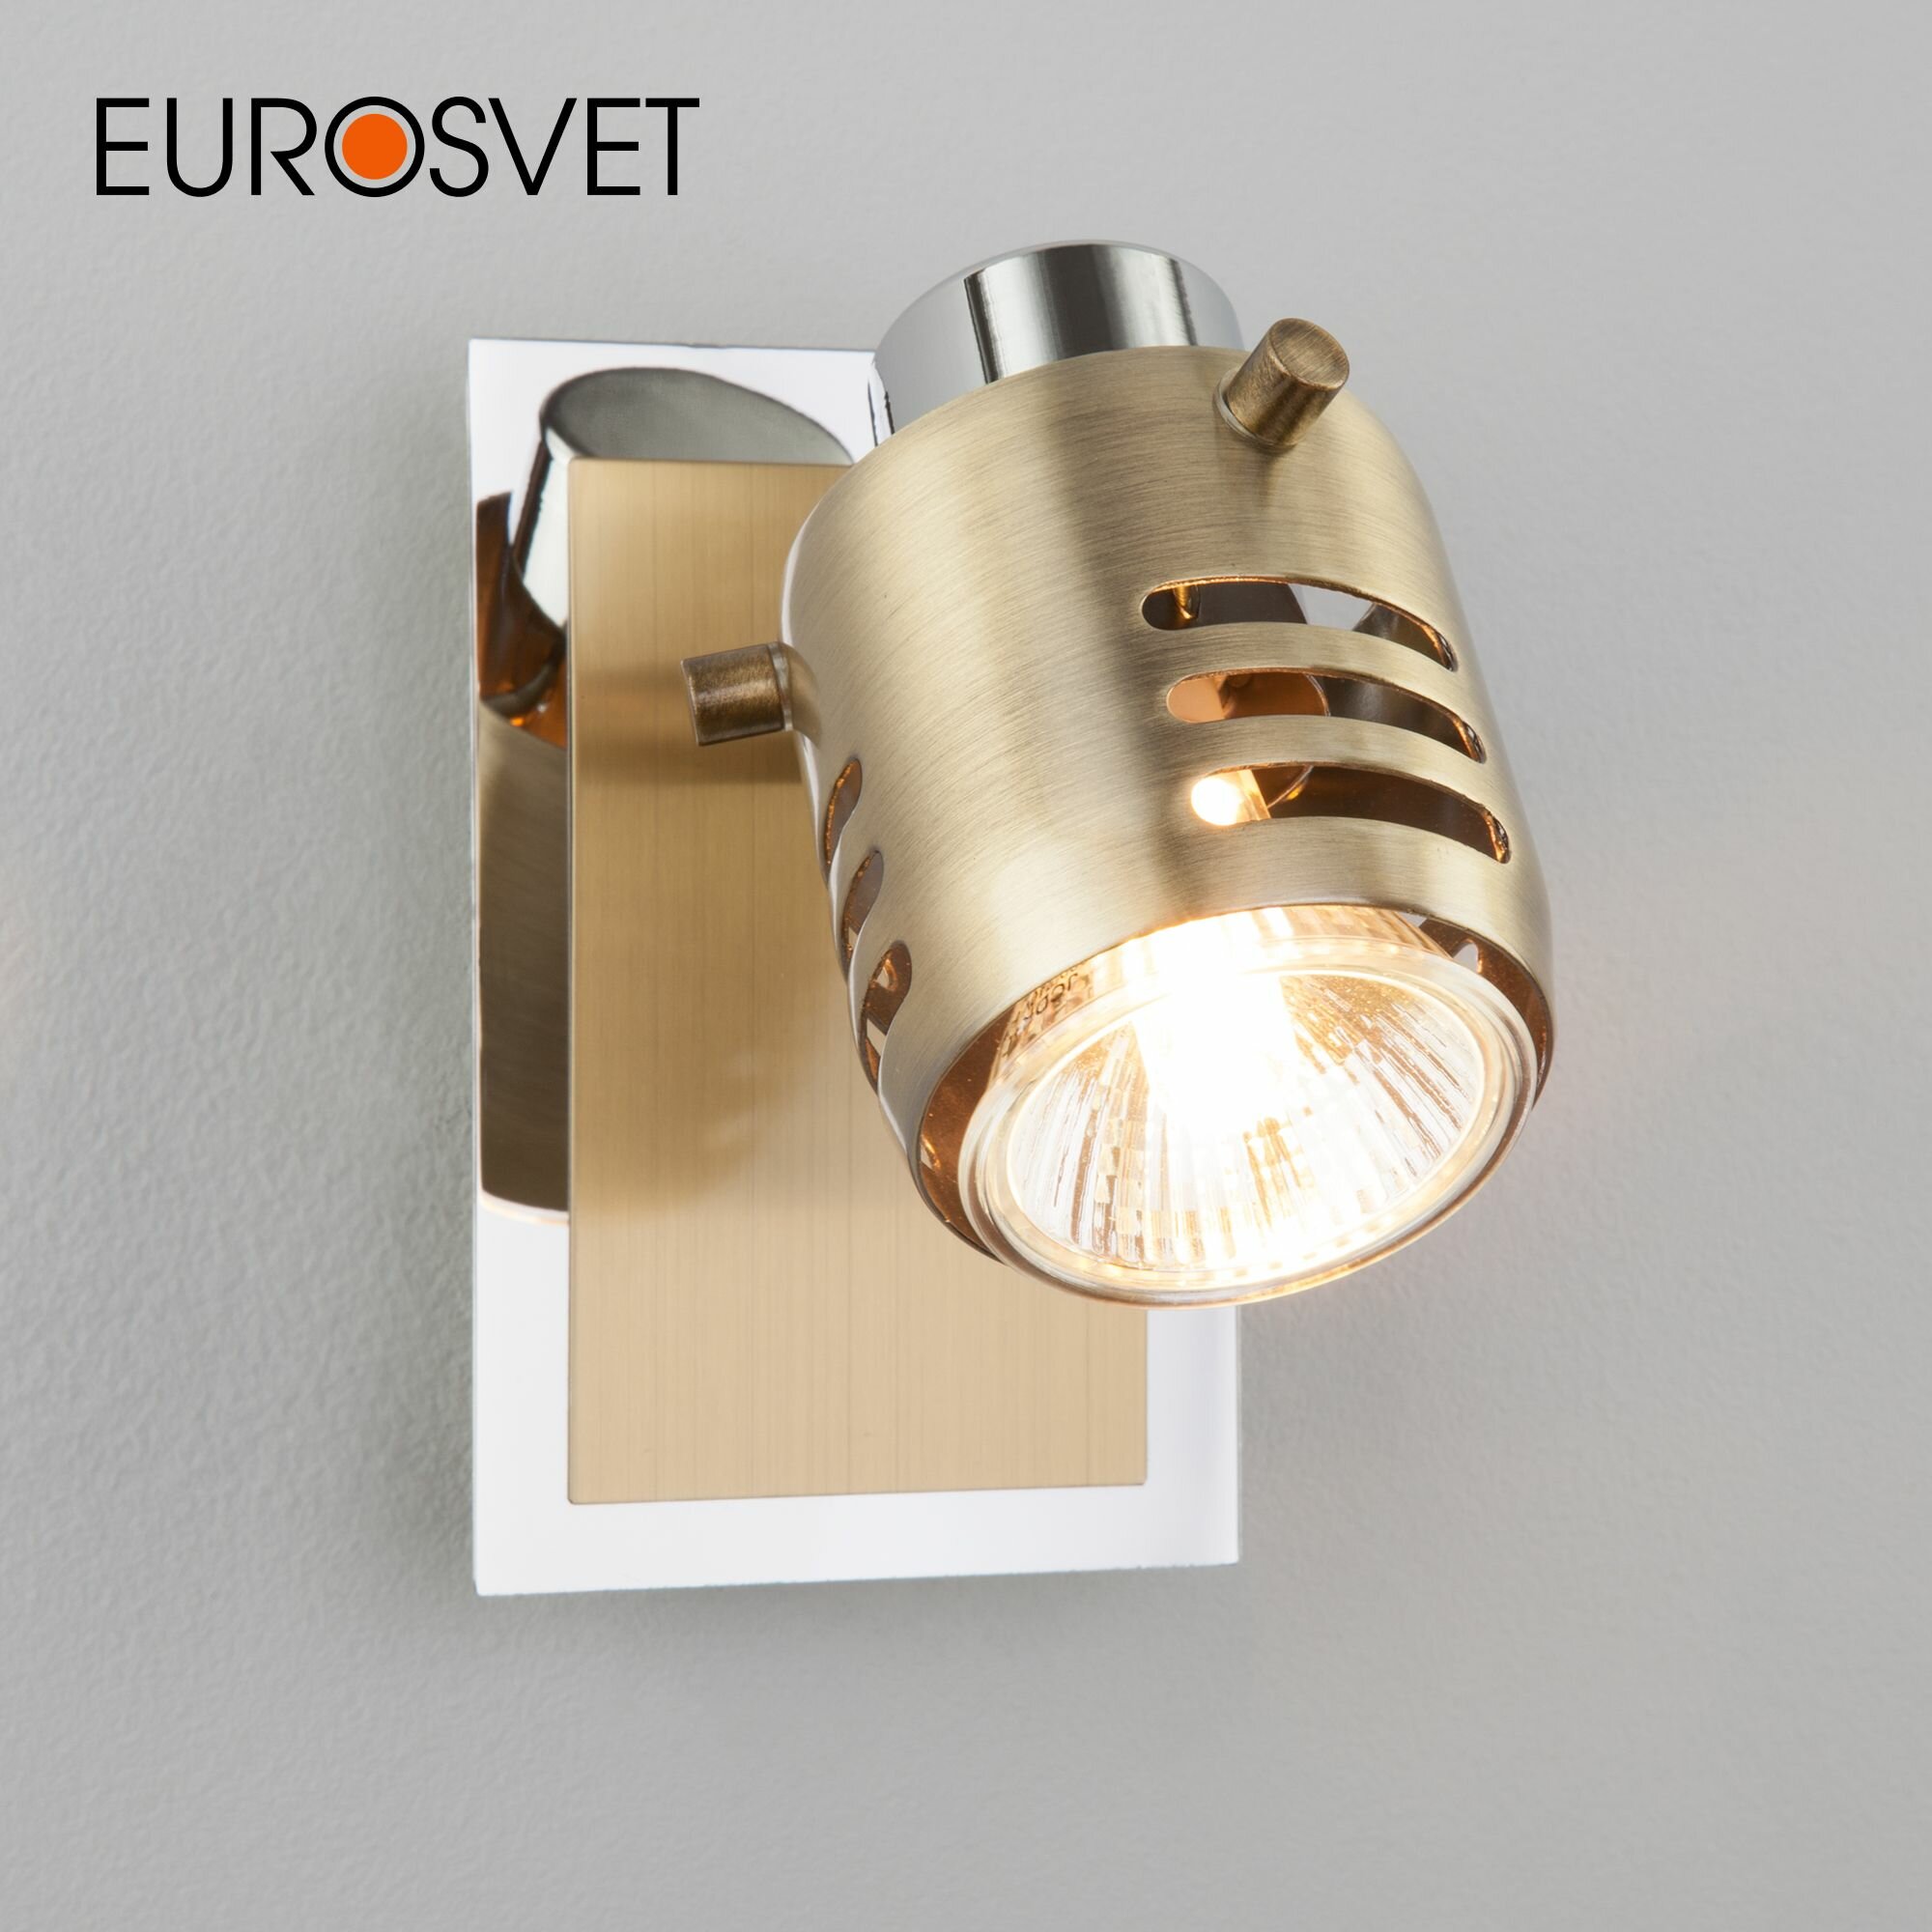 Спот Eurosvet 23463/1 хром/античная бронза, кол-во ламп: 1 шт, цвет плафона: коричневый